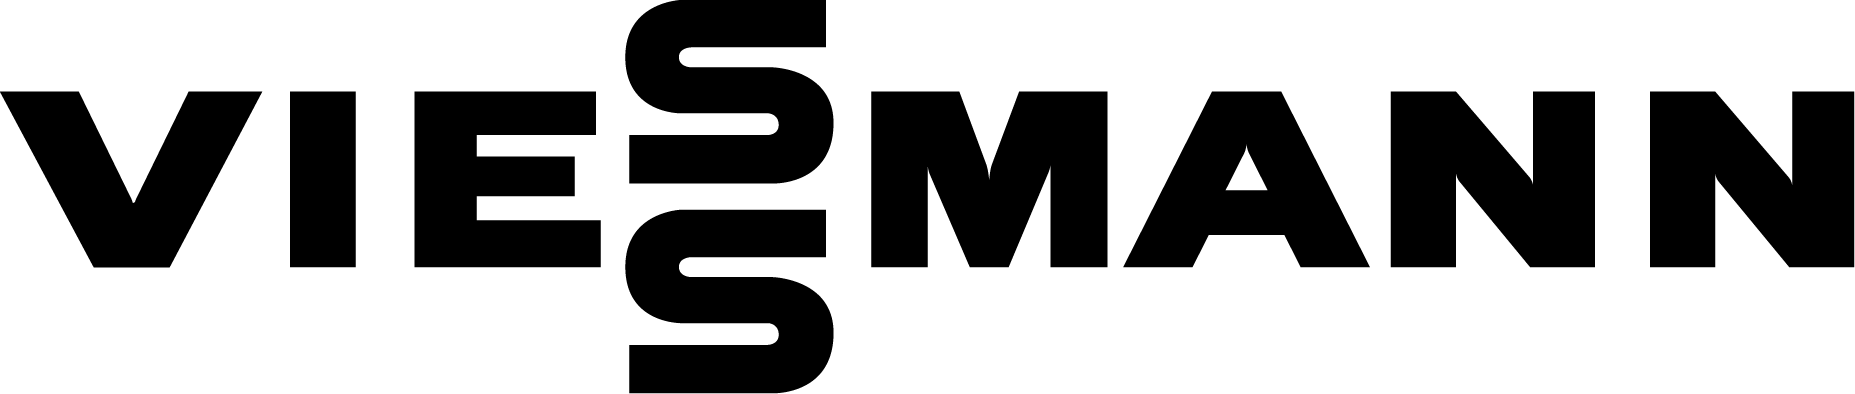 Viessmann Logo - Graphics and logos